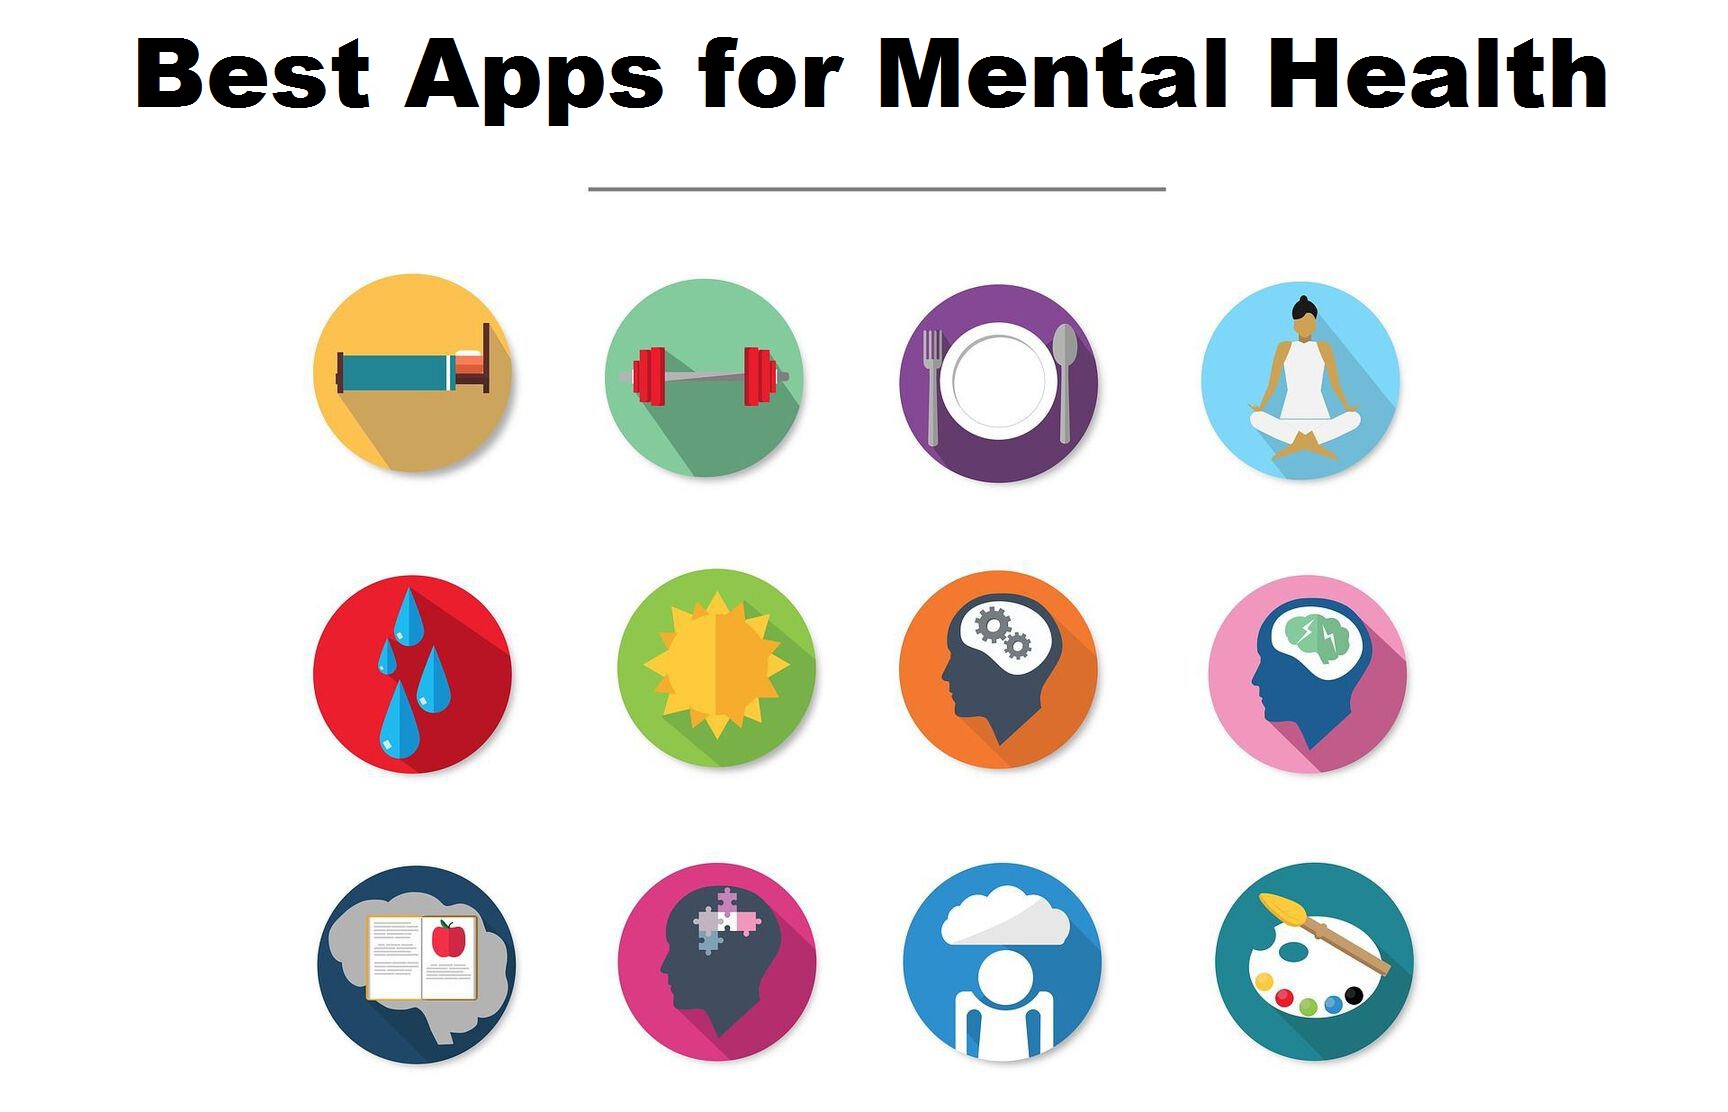 #Best Apps for Mental Health